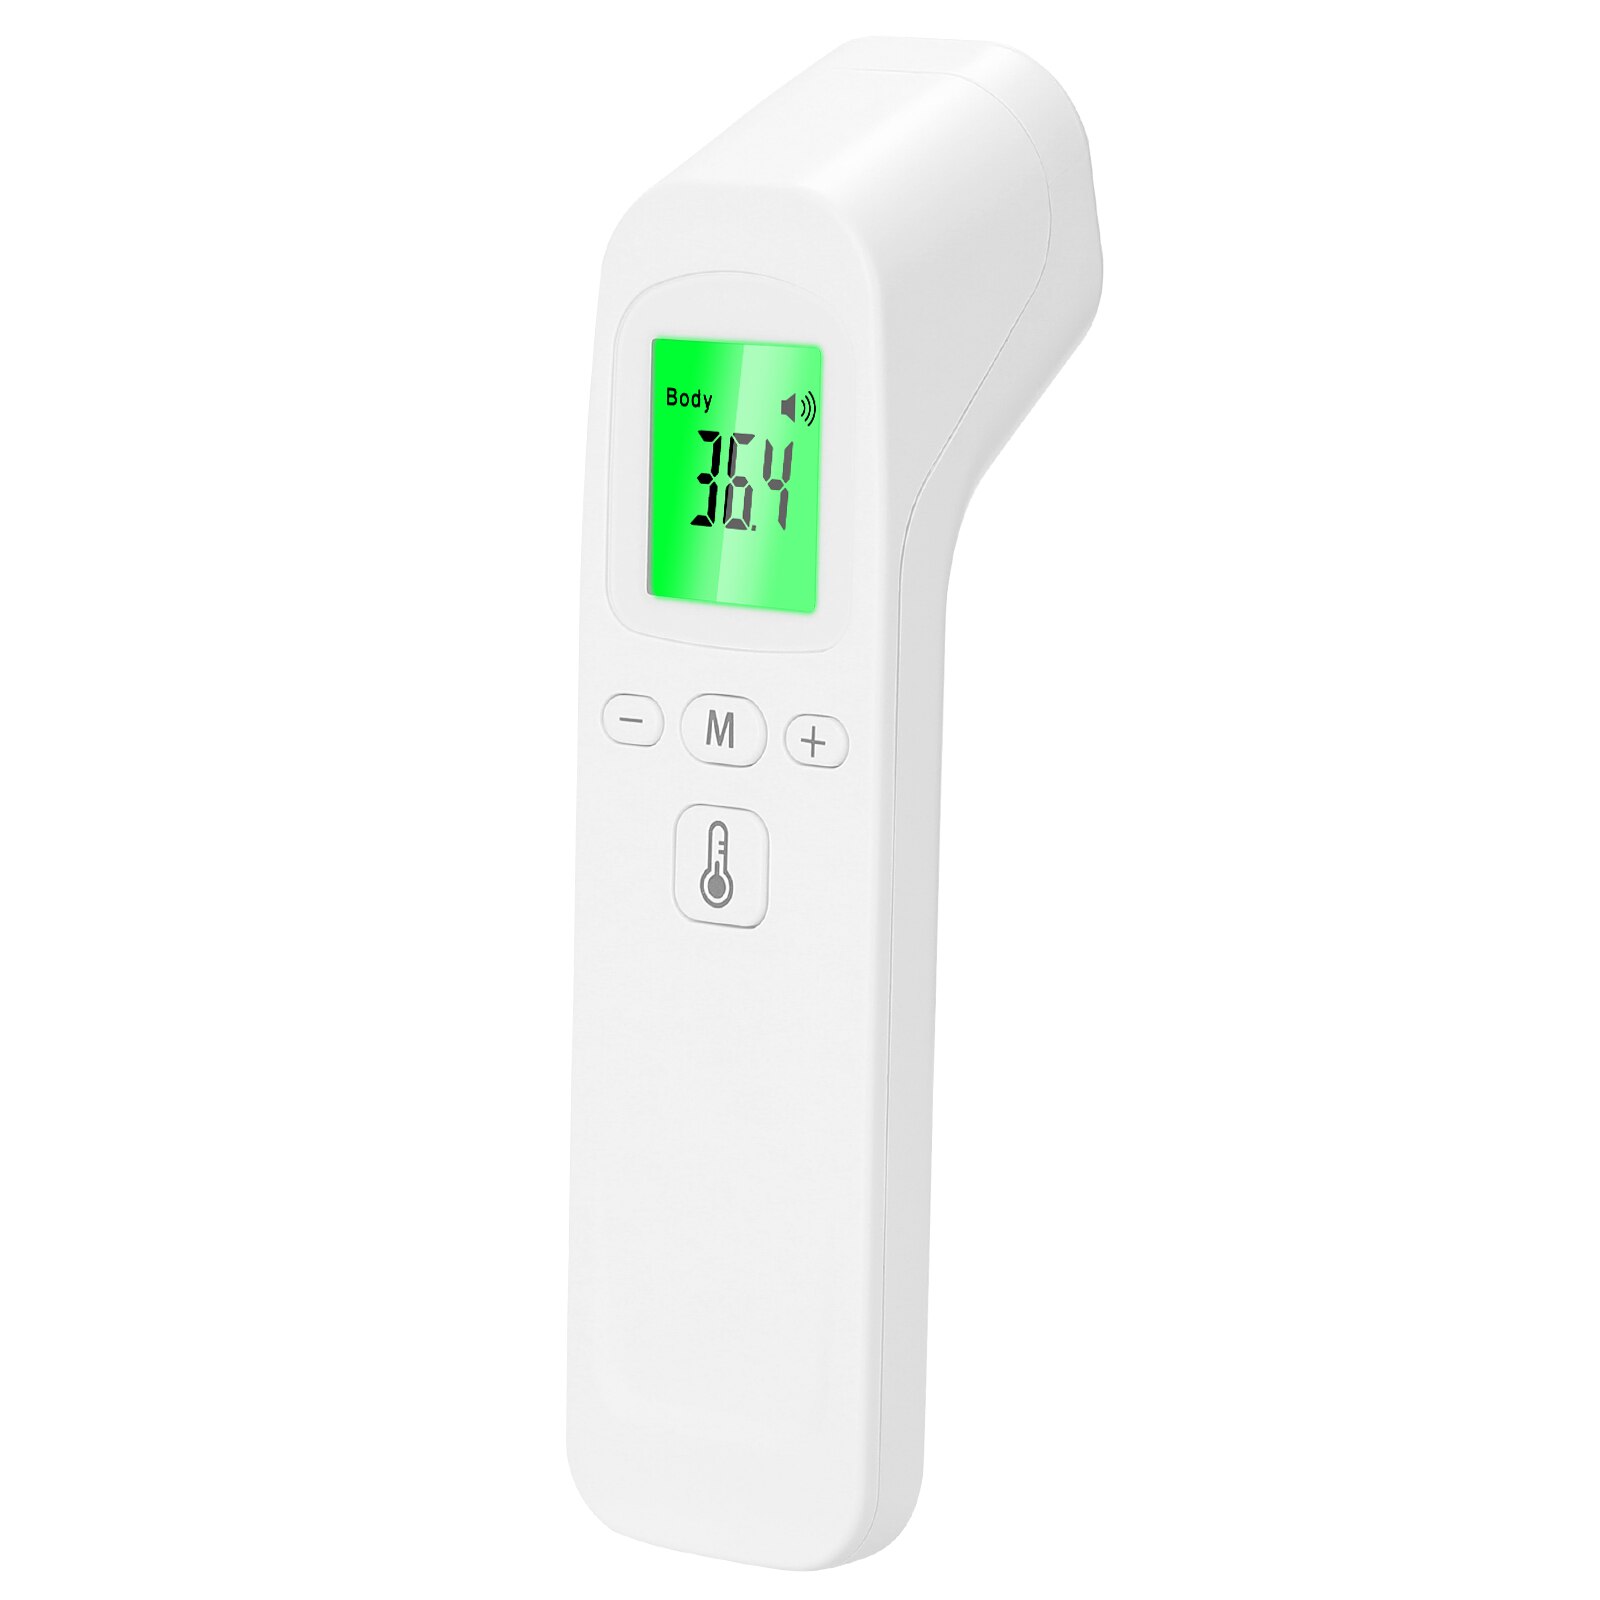 Huishoudelijke Oximeter Vinger Oxymetrie Bloed Zuurstof Hartslagmeter En Infrarood Thermometer Digitale Non-Contact Thermometers: Style 03